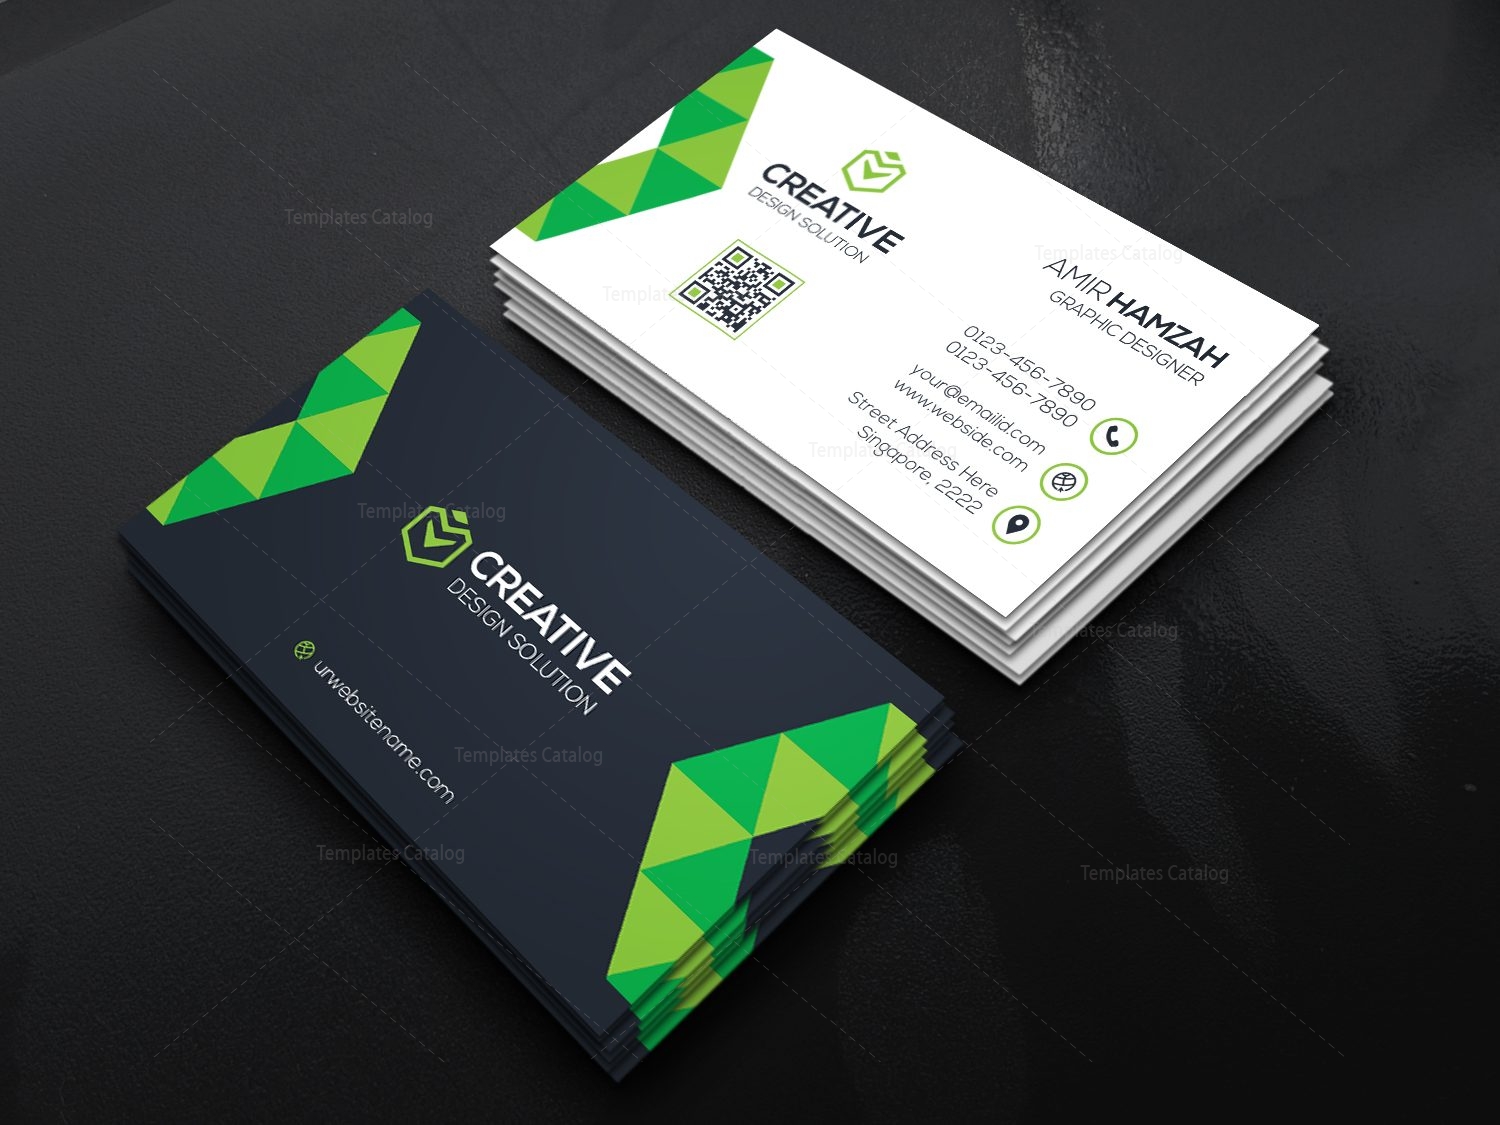 Designing Business Cards - Modern Business Card Designs Template PSD ...